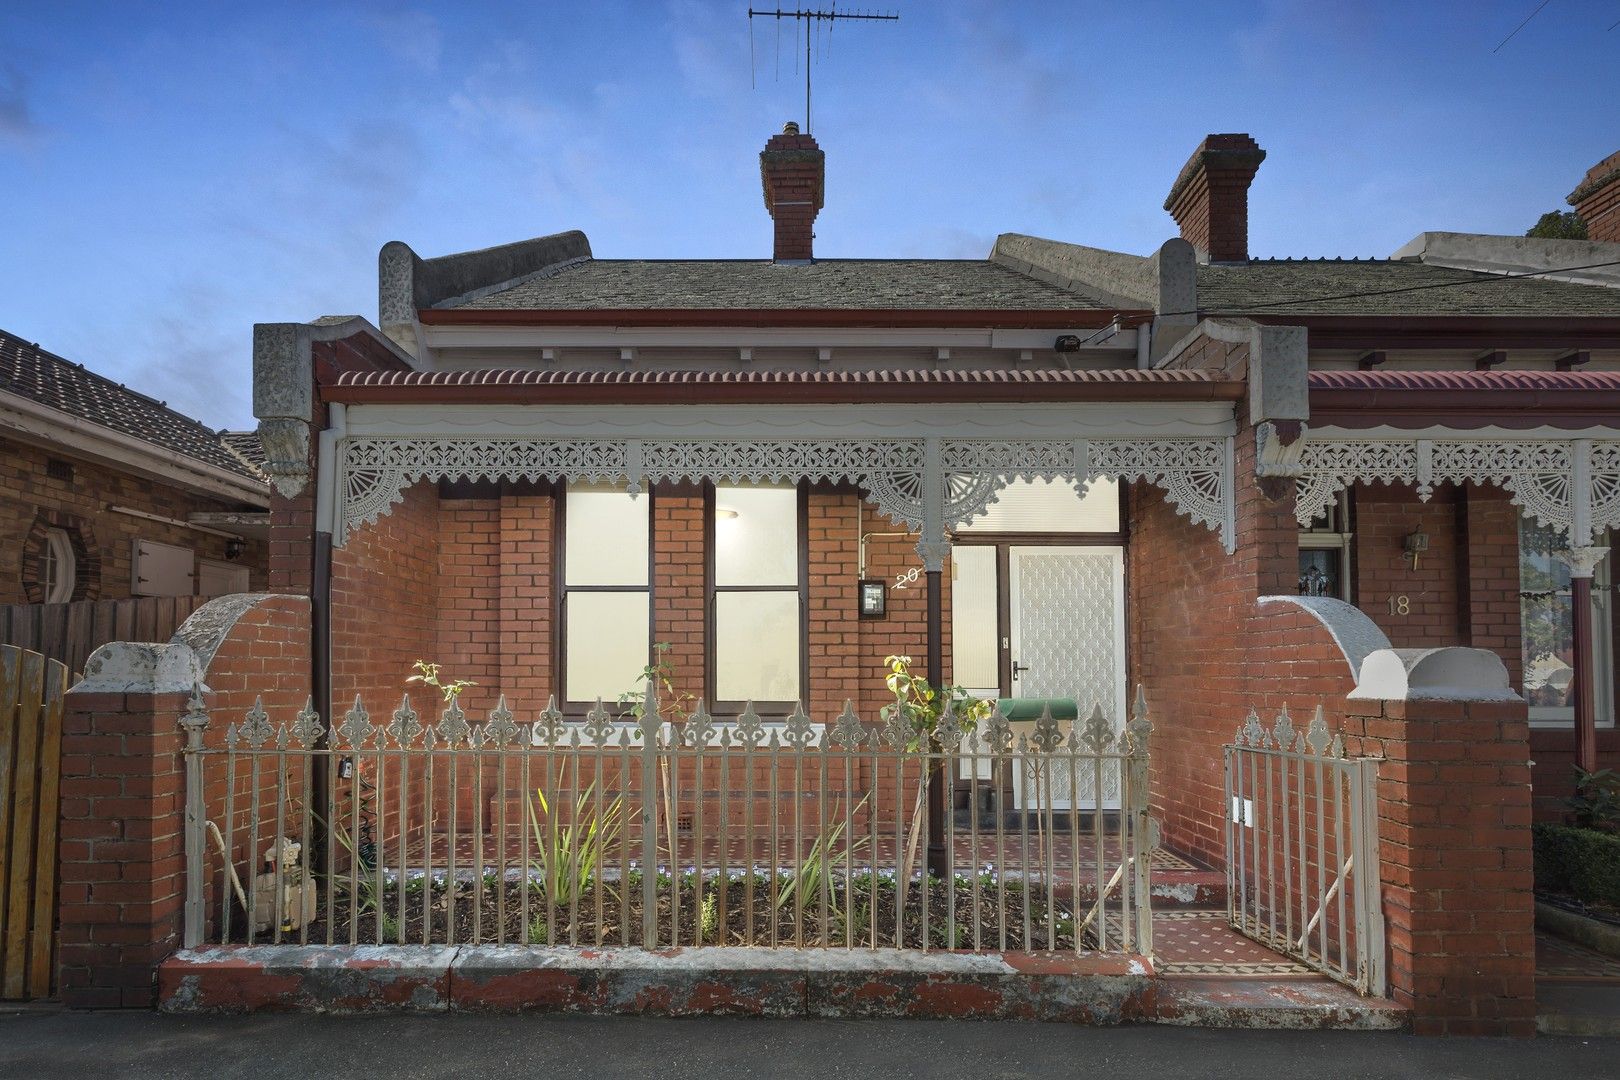 3 bedrooms House in 20 Erskine Street NORTH MELBOURNE VIC, 3051